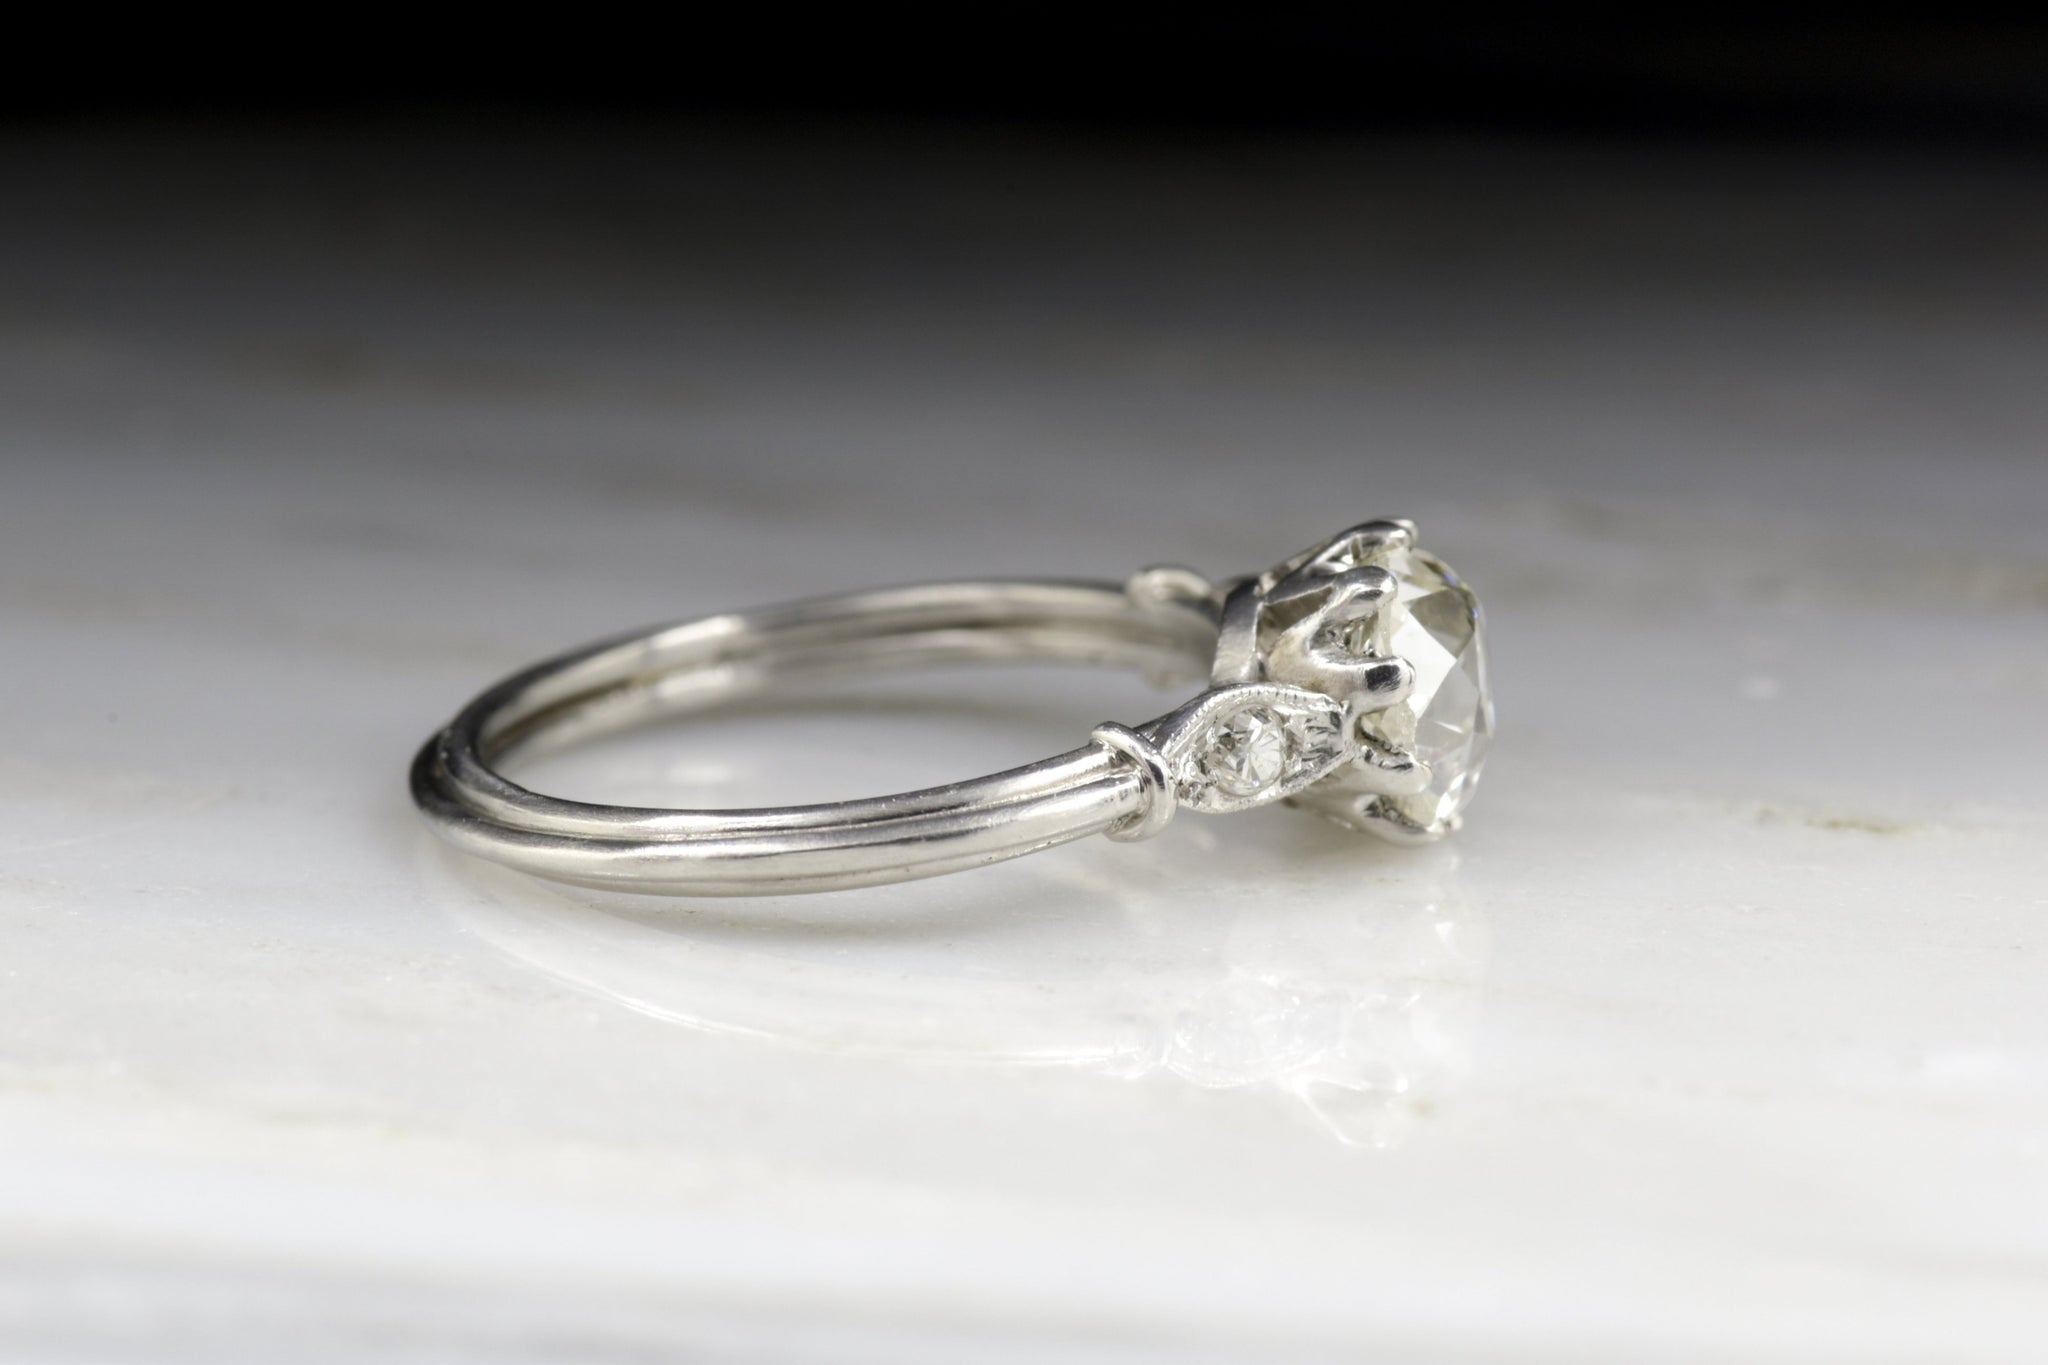 Antique Edwardian, Art Deco Women's Engagement Ring with a 1.27 Carat ...